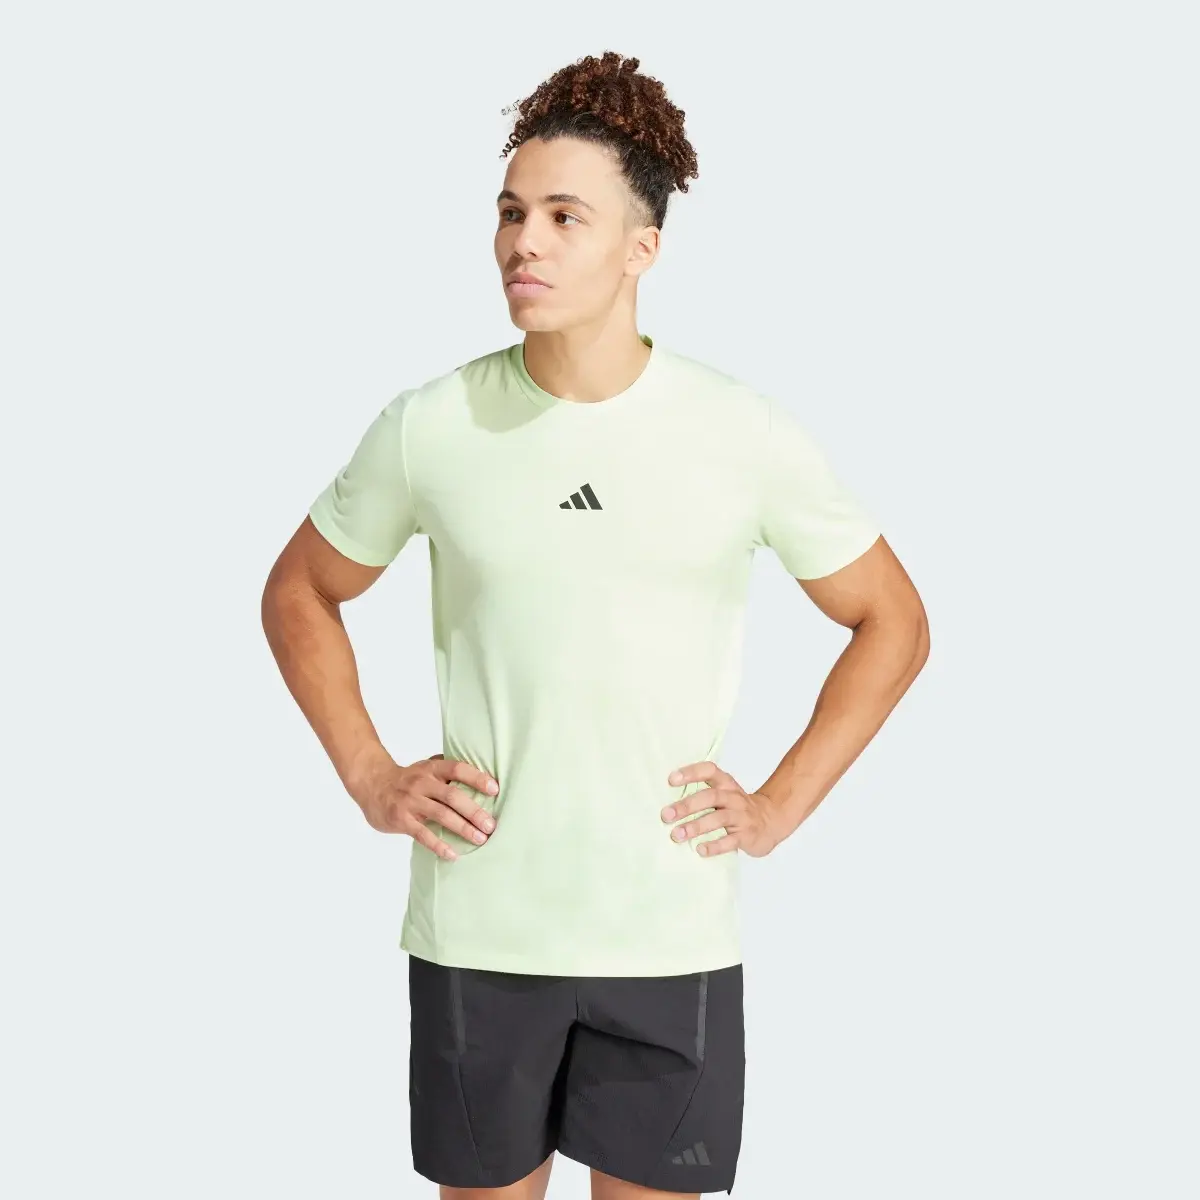 Adidas T-shirt Designed for Training Workout. 2